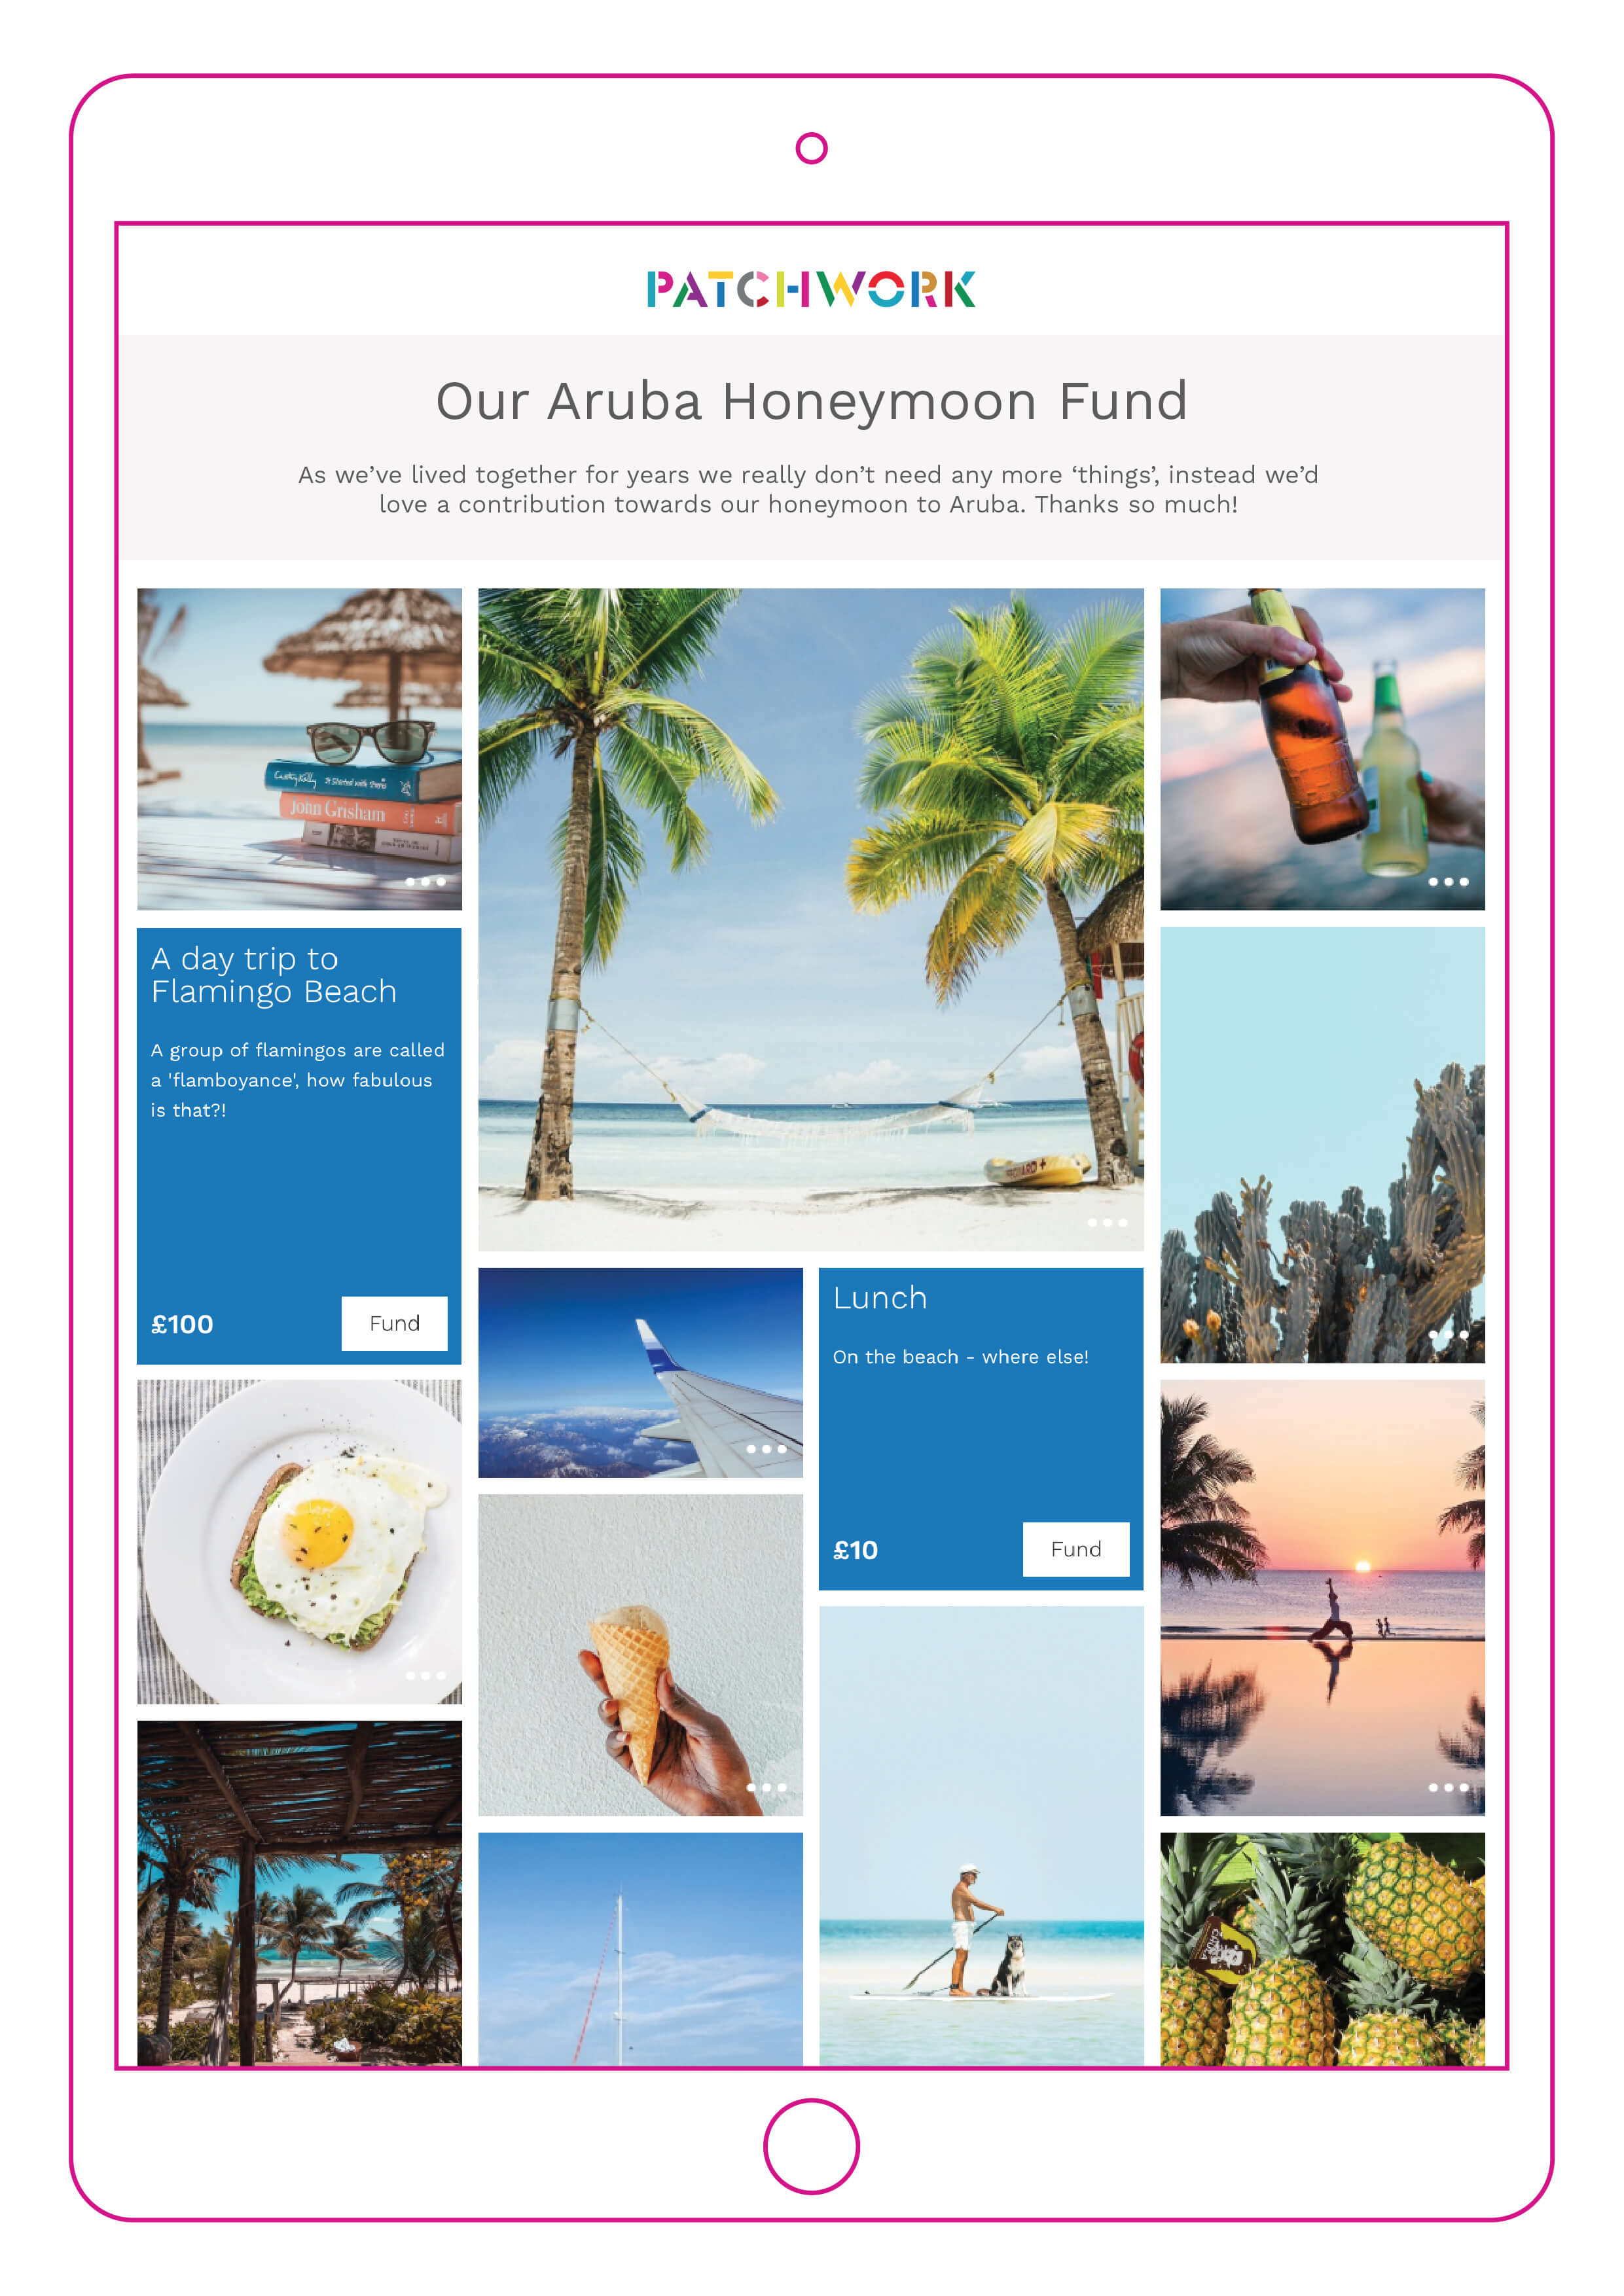 Patchwork Aruba honeymoon fund